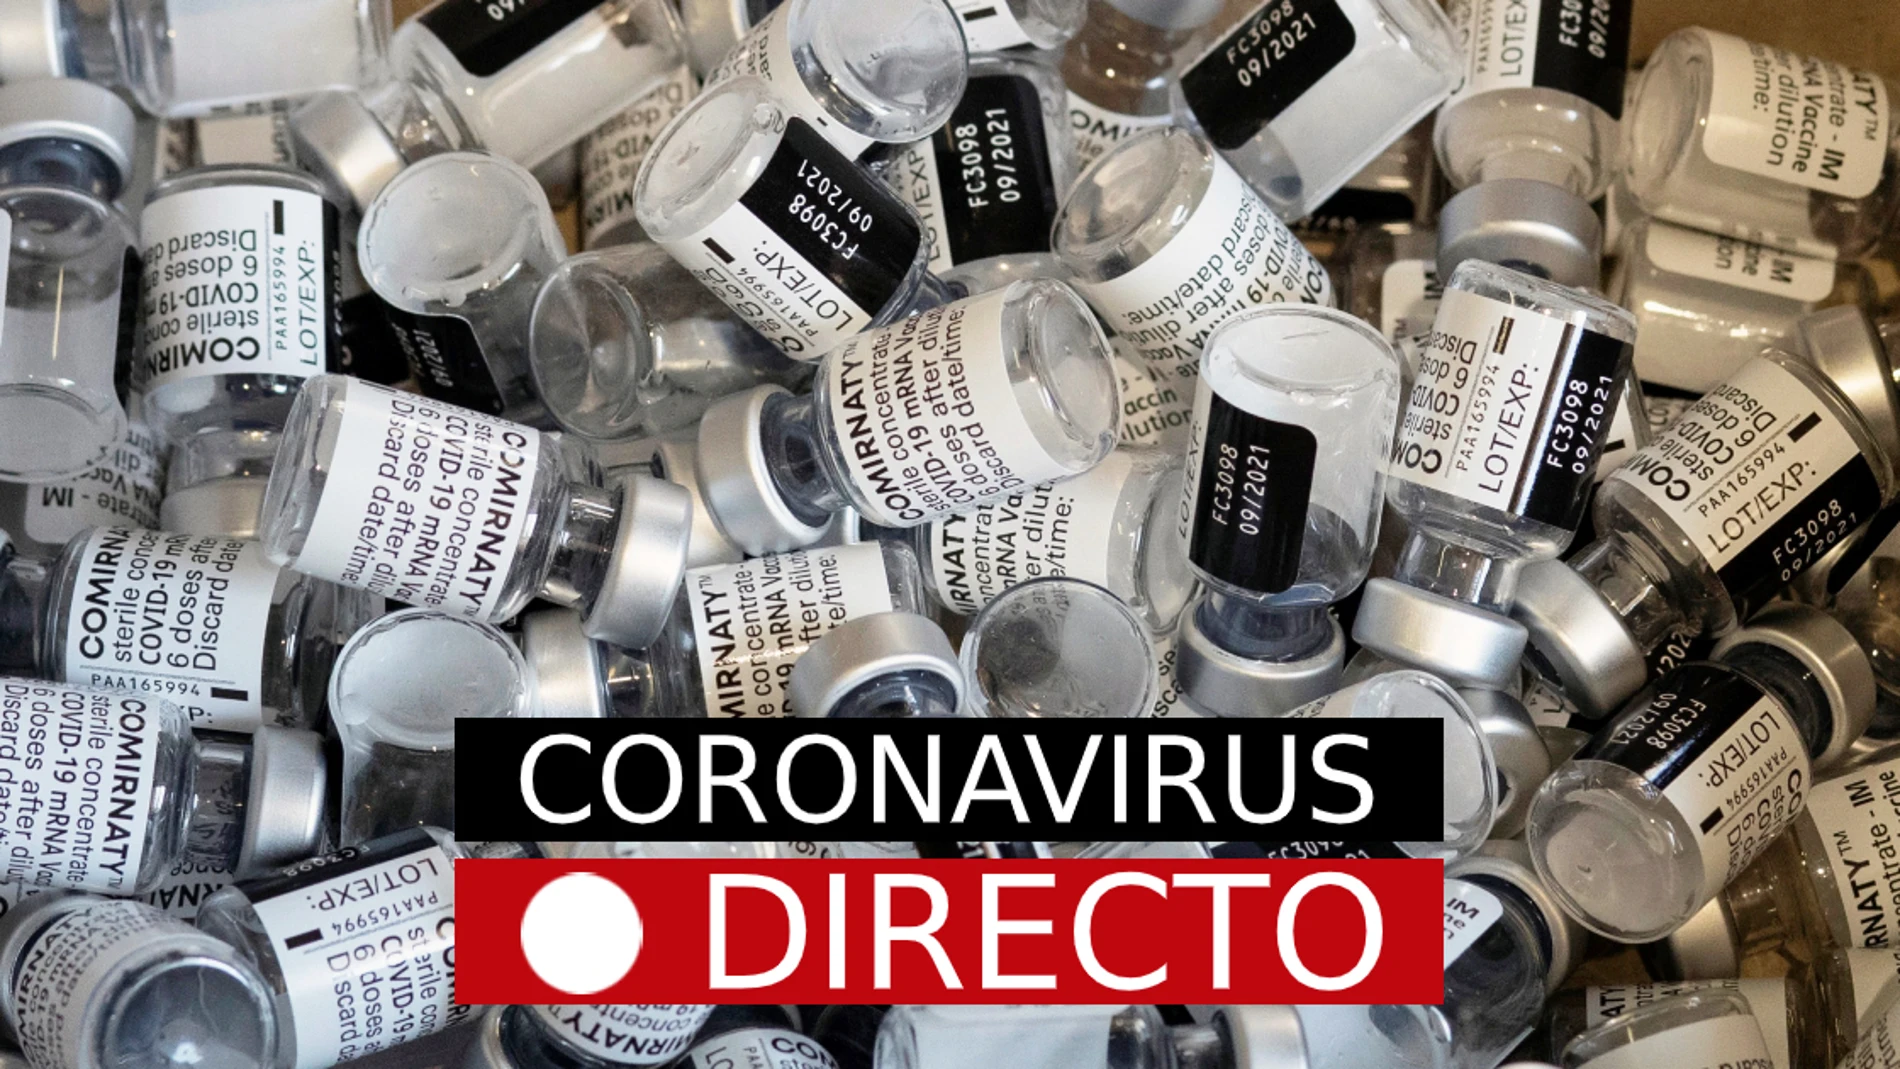 Última hora de coronavirus | Vacunación en España con segunda dosis de AstraZeneca o Pfizer, hoy